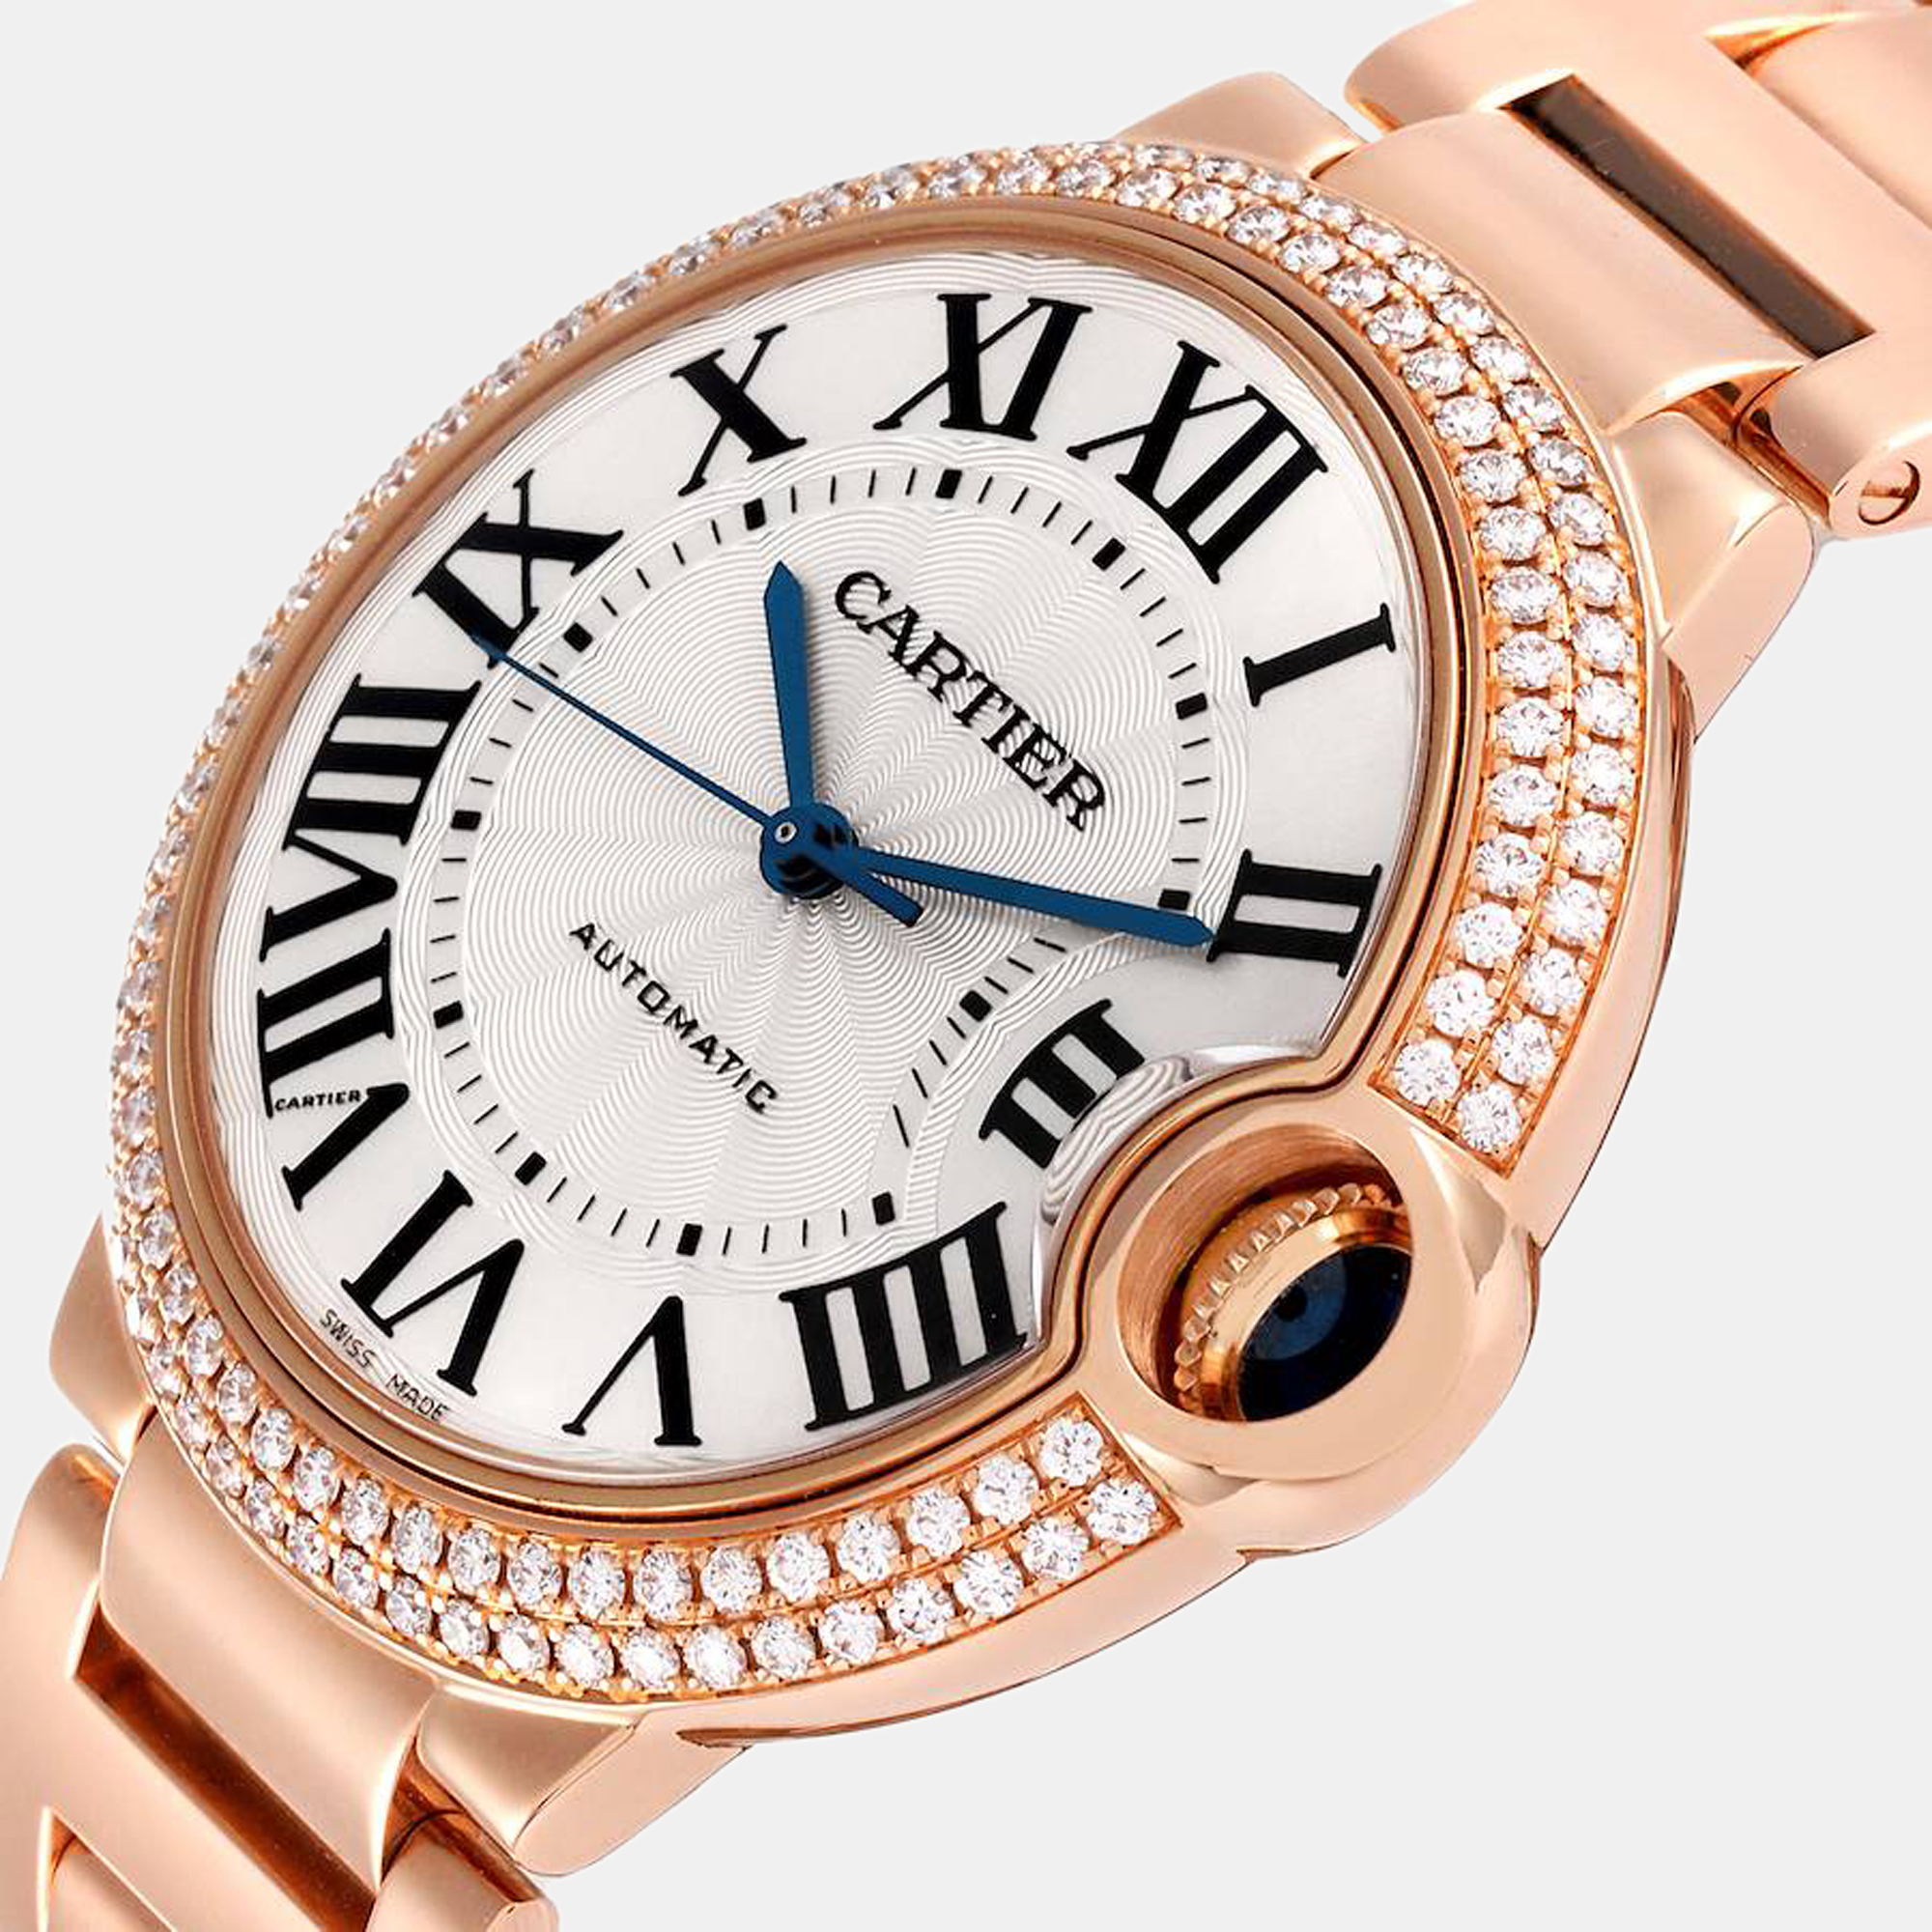 

Cartier Silver 18k Rose Gold Ballon Bleu WE9005Z3 Automatic Women's Wristwatch 36.5 mm